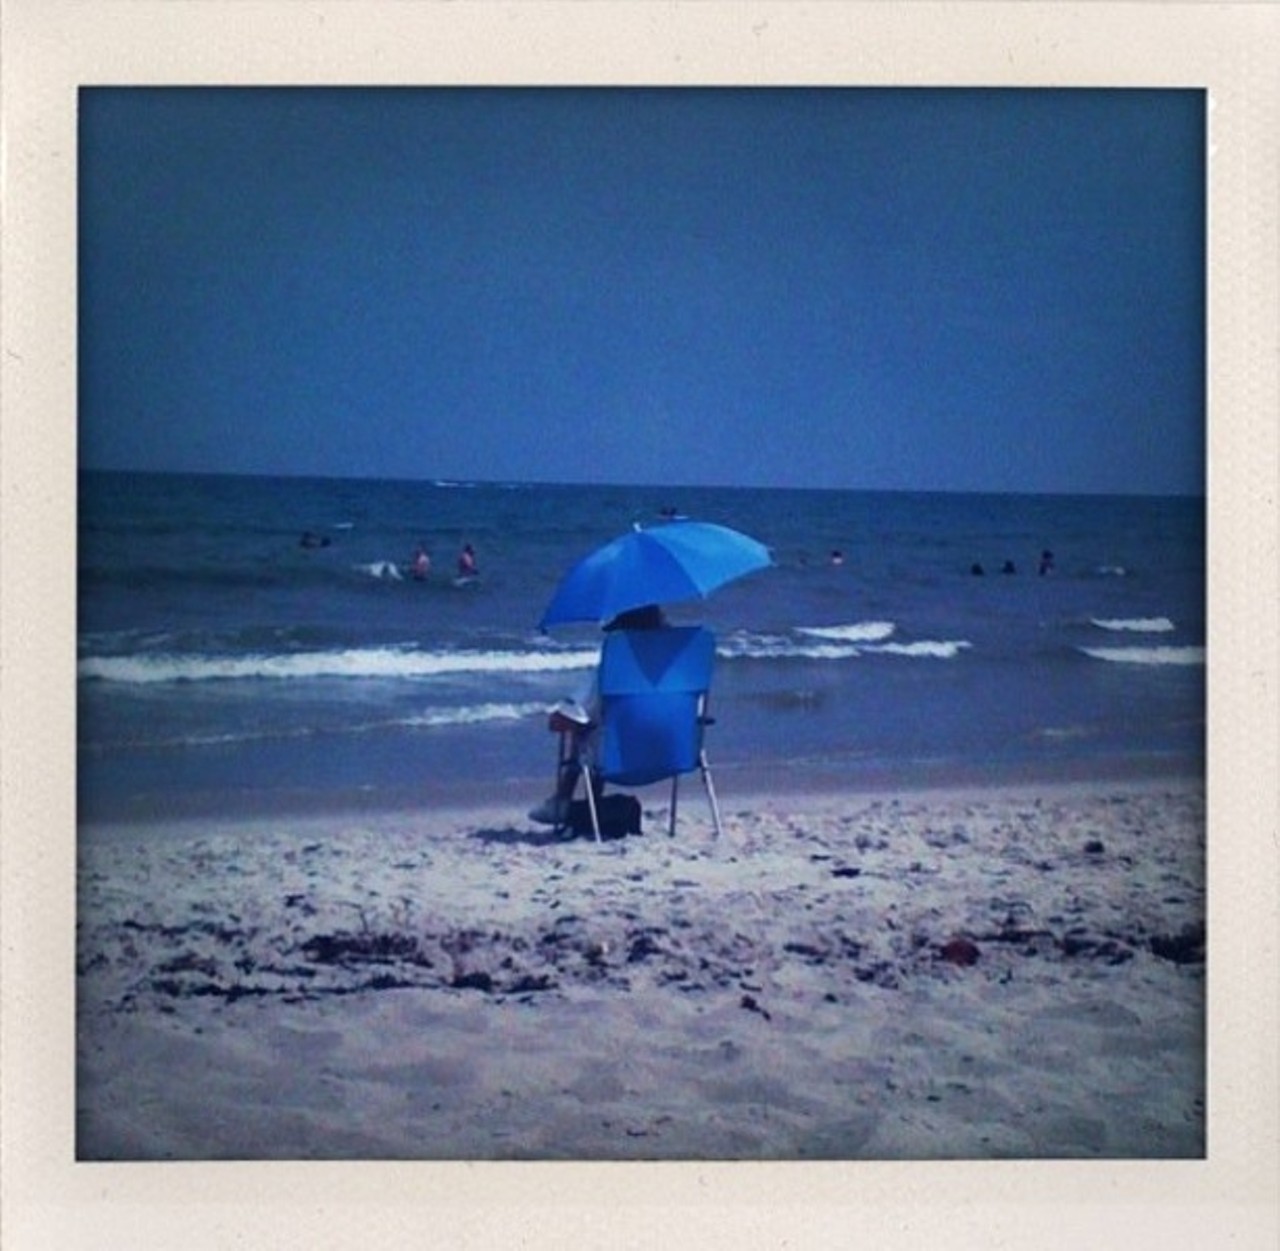 Feeling blue at Cocoa Beach